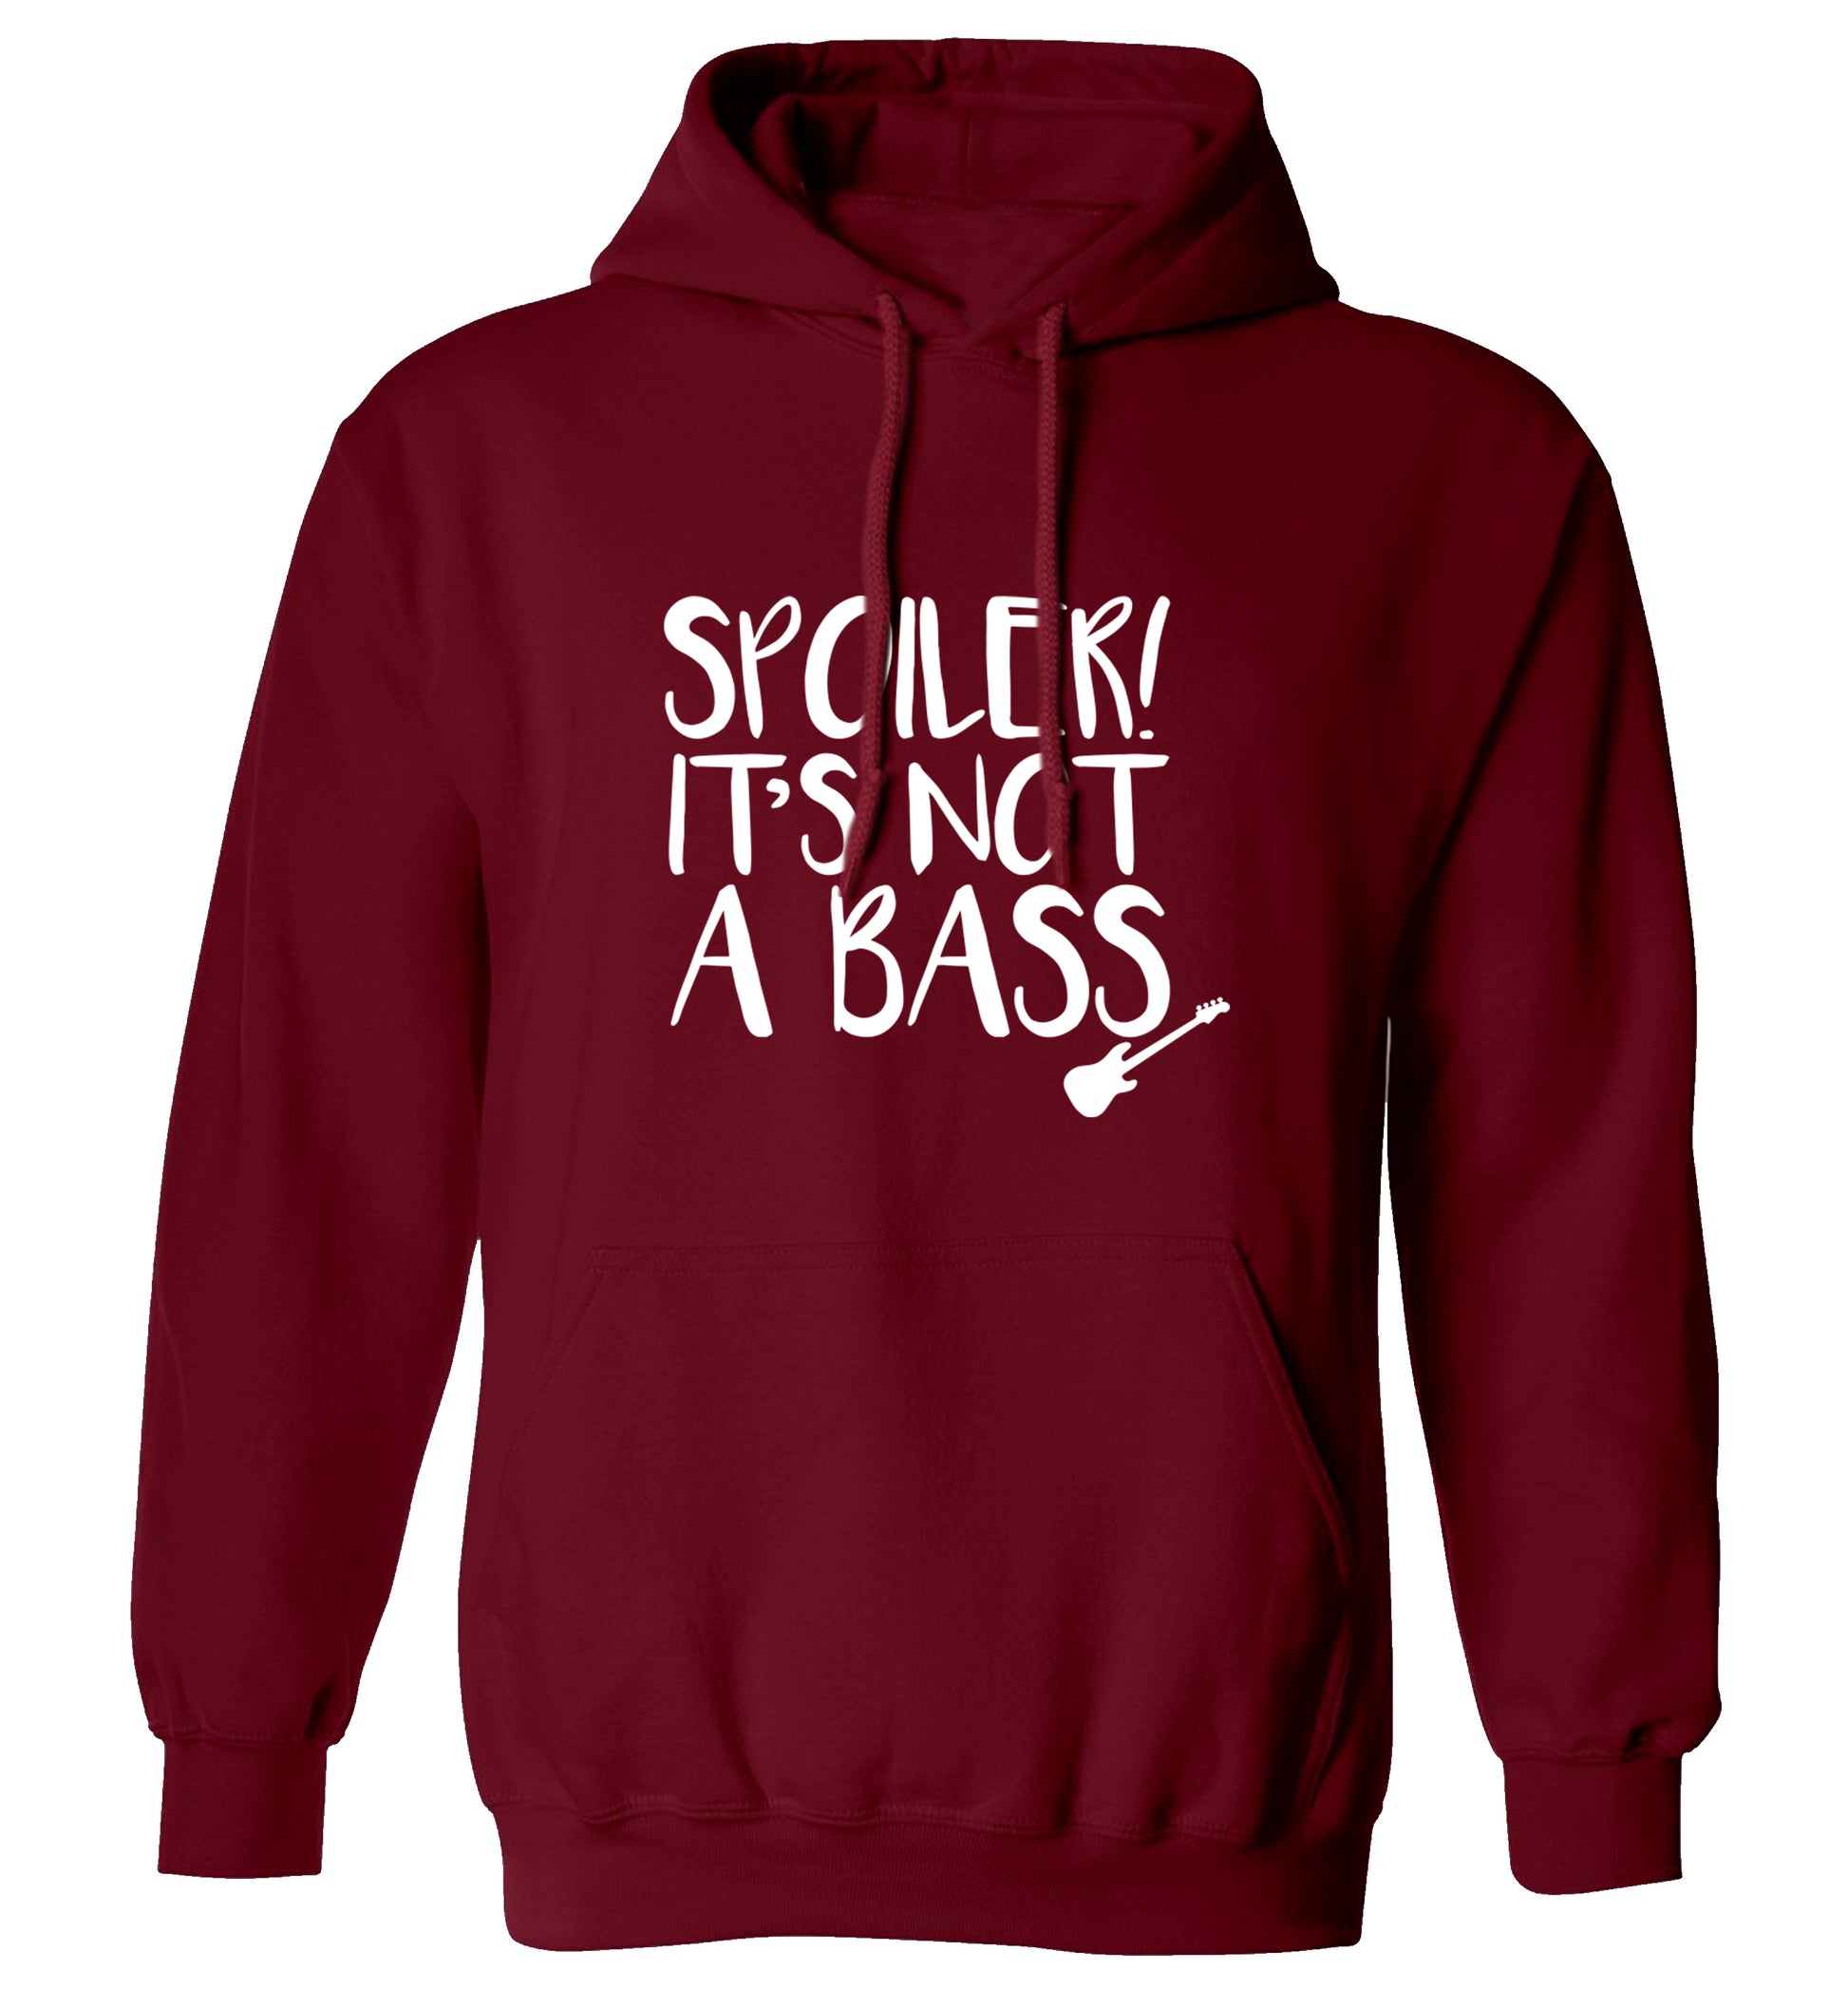 Spoiler it's not a bass adults unisex maroon hoodie 2XL